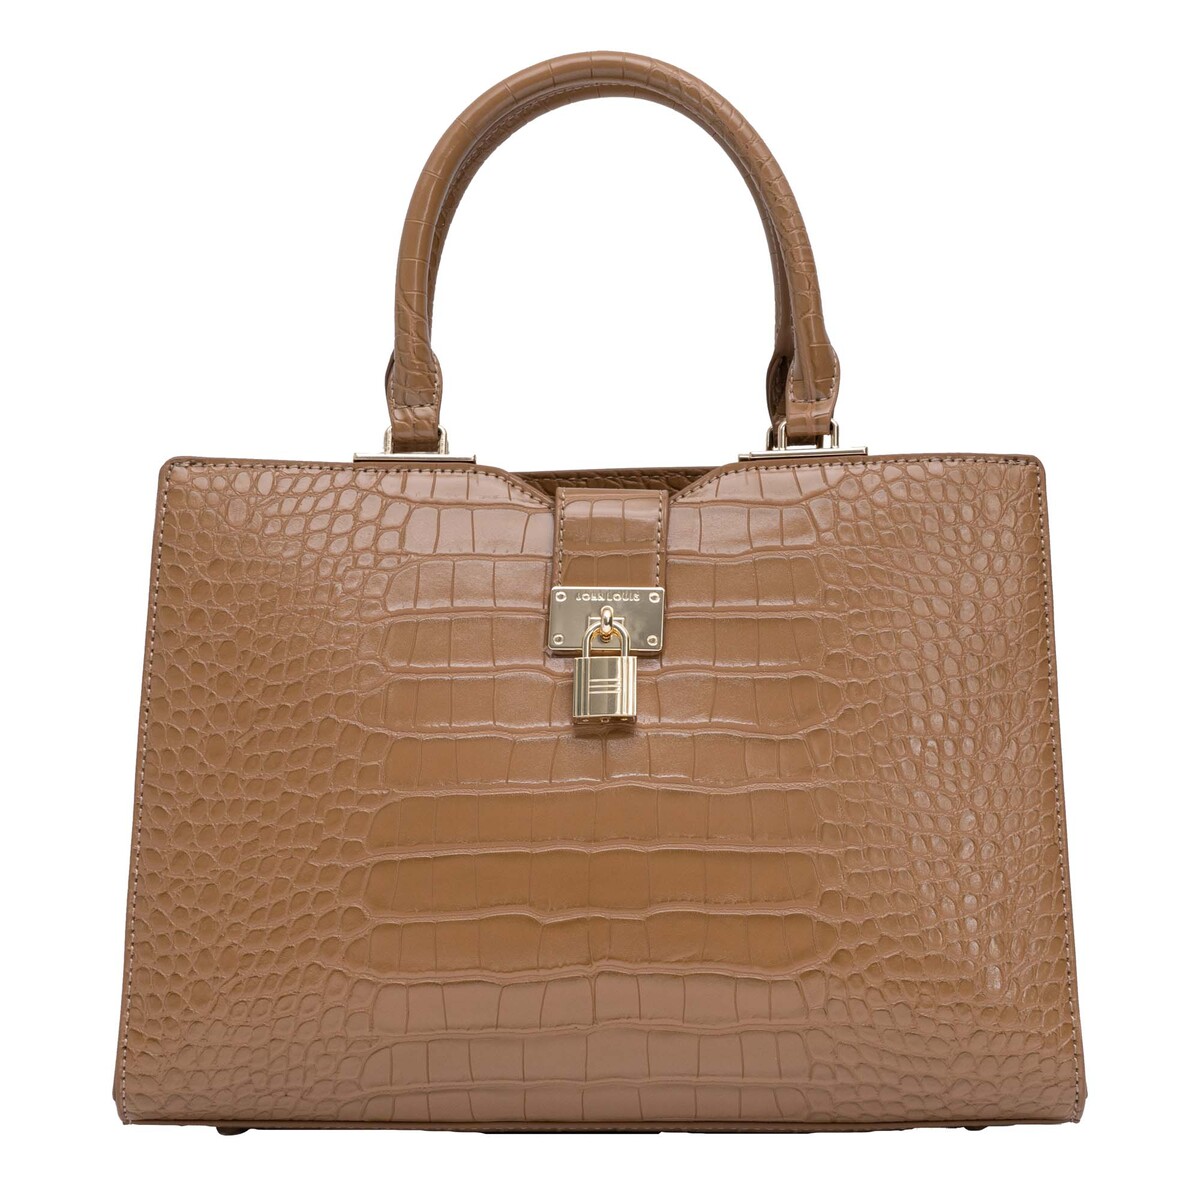 John Louis Women's Fashion Bag JLSU23-344, Camel